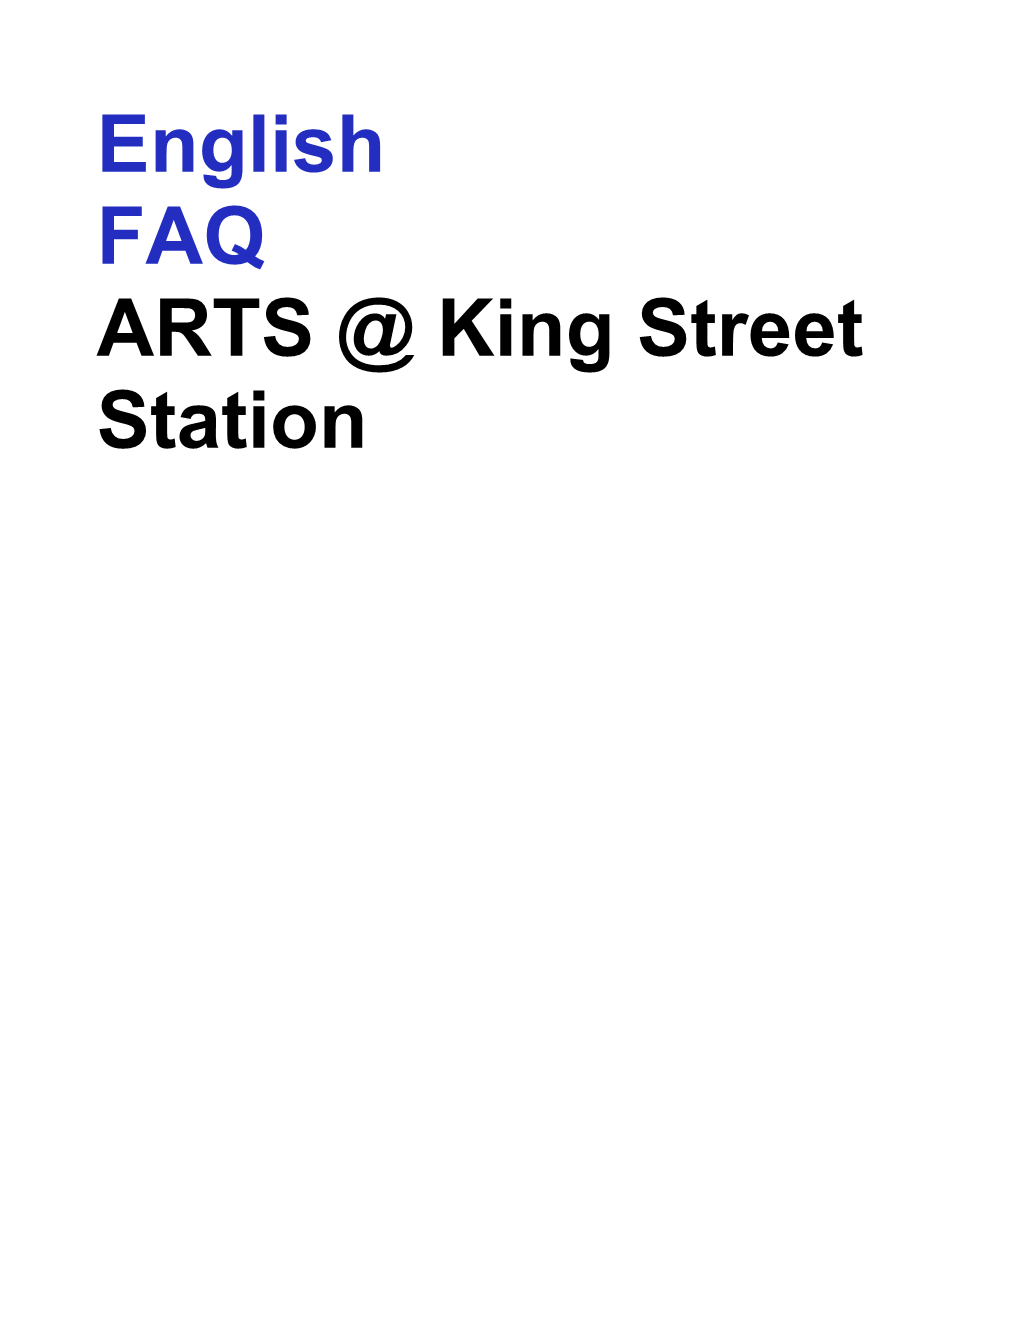 ARTS @ King Street Station English